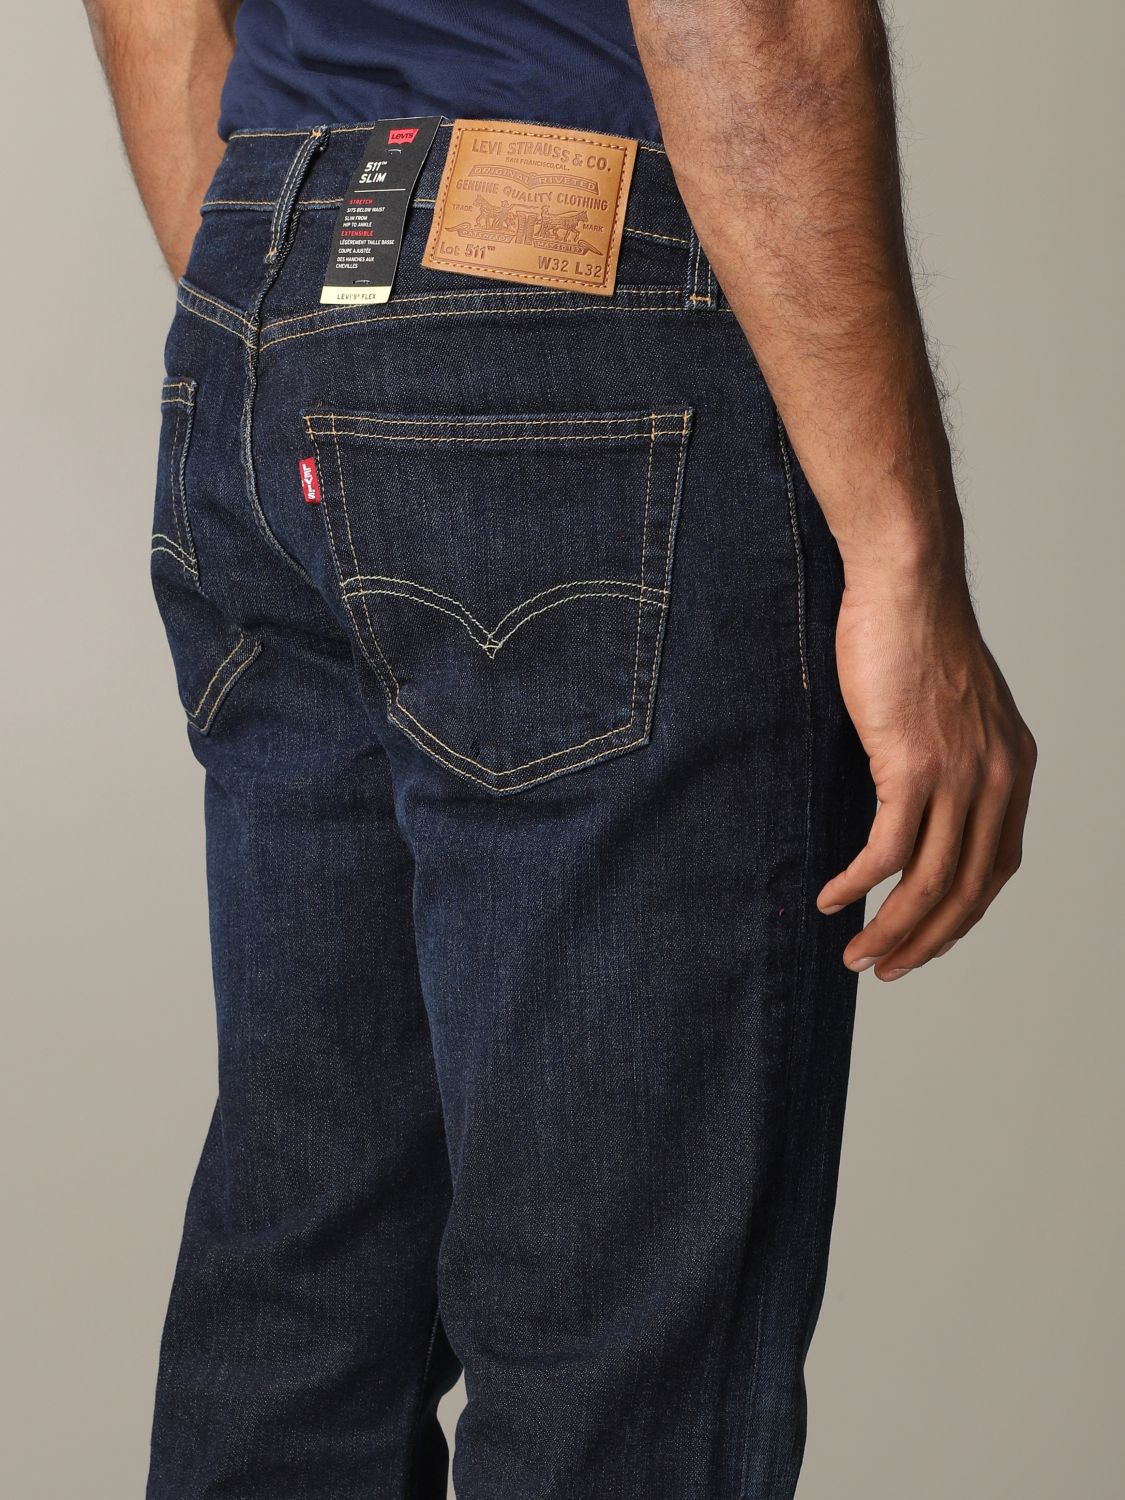 Levi's Outlet: 5-pocket jeans | Jeans 